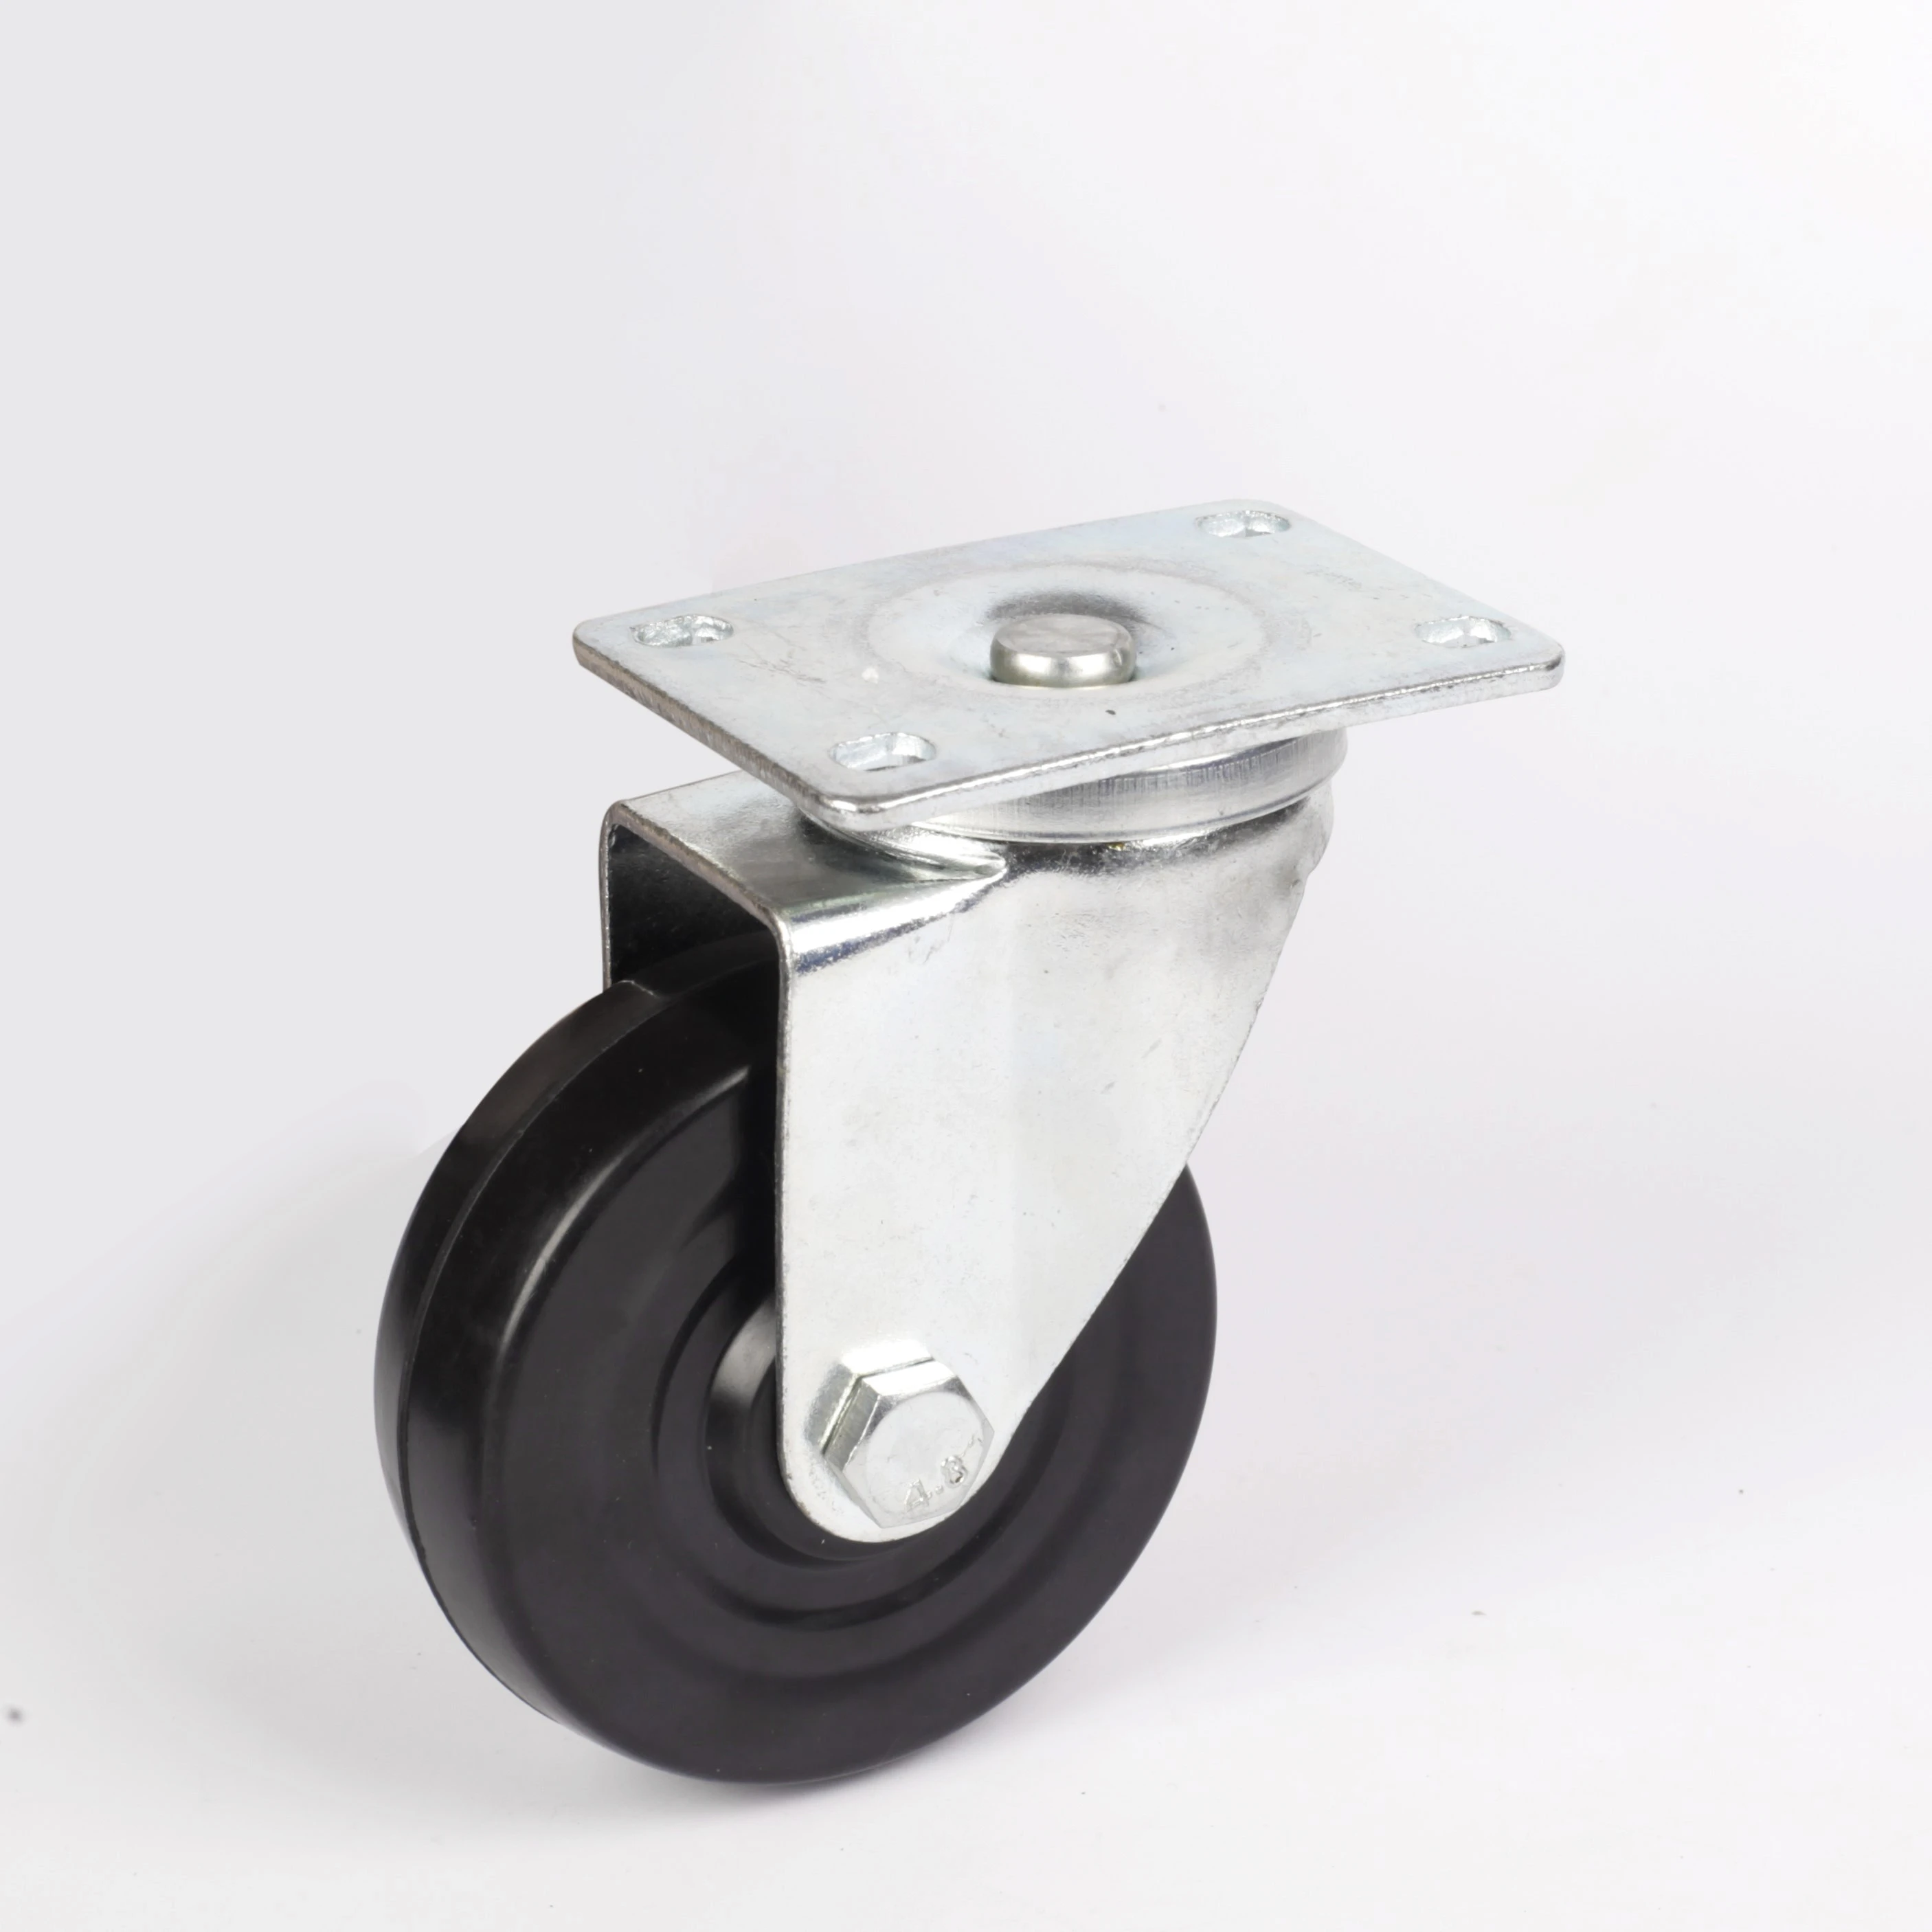 Rubber Castor Wheel/ Black Rubber Castor Wheel /Swivel Caster Wheels Industrial Caster Top